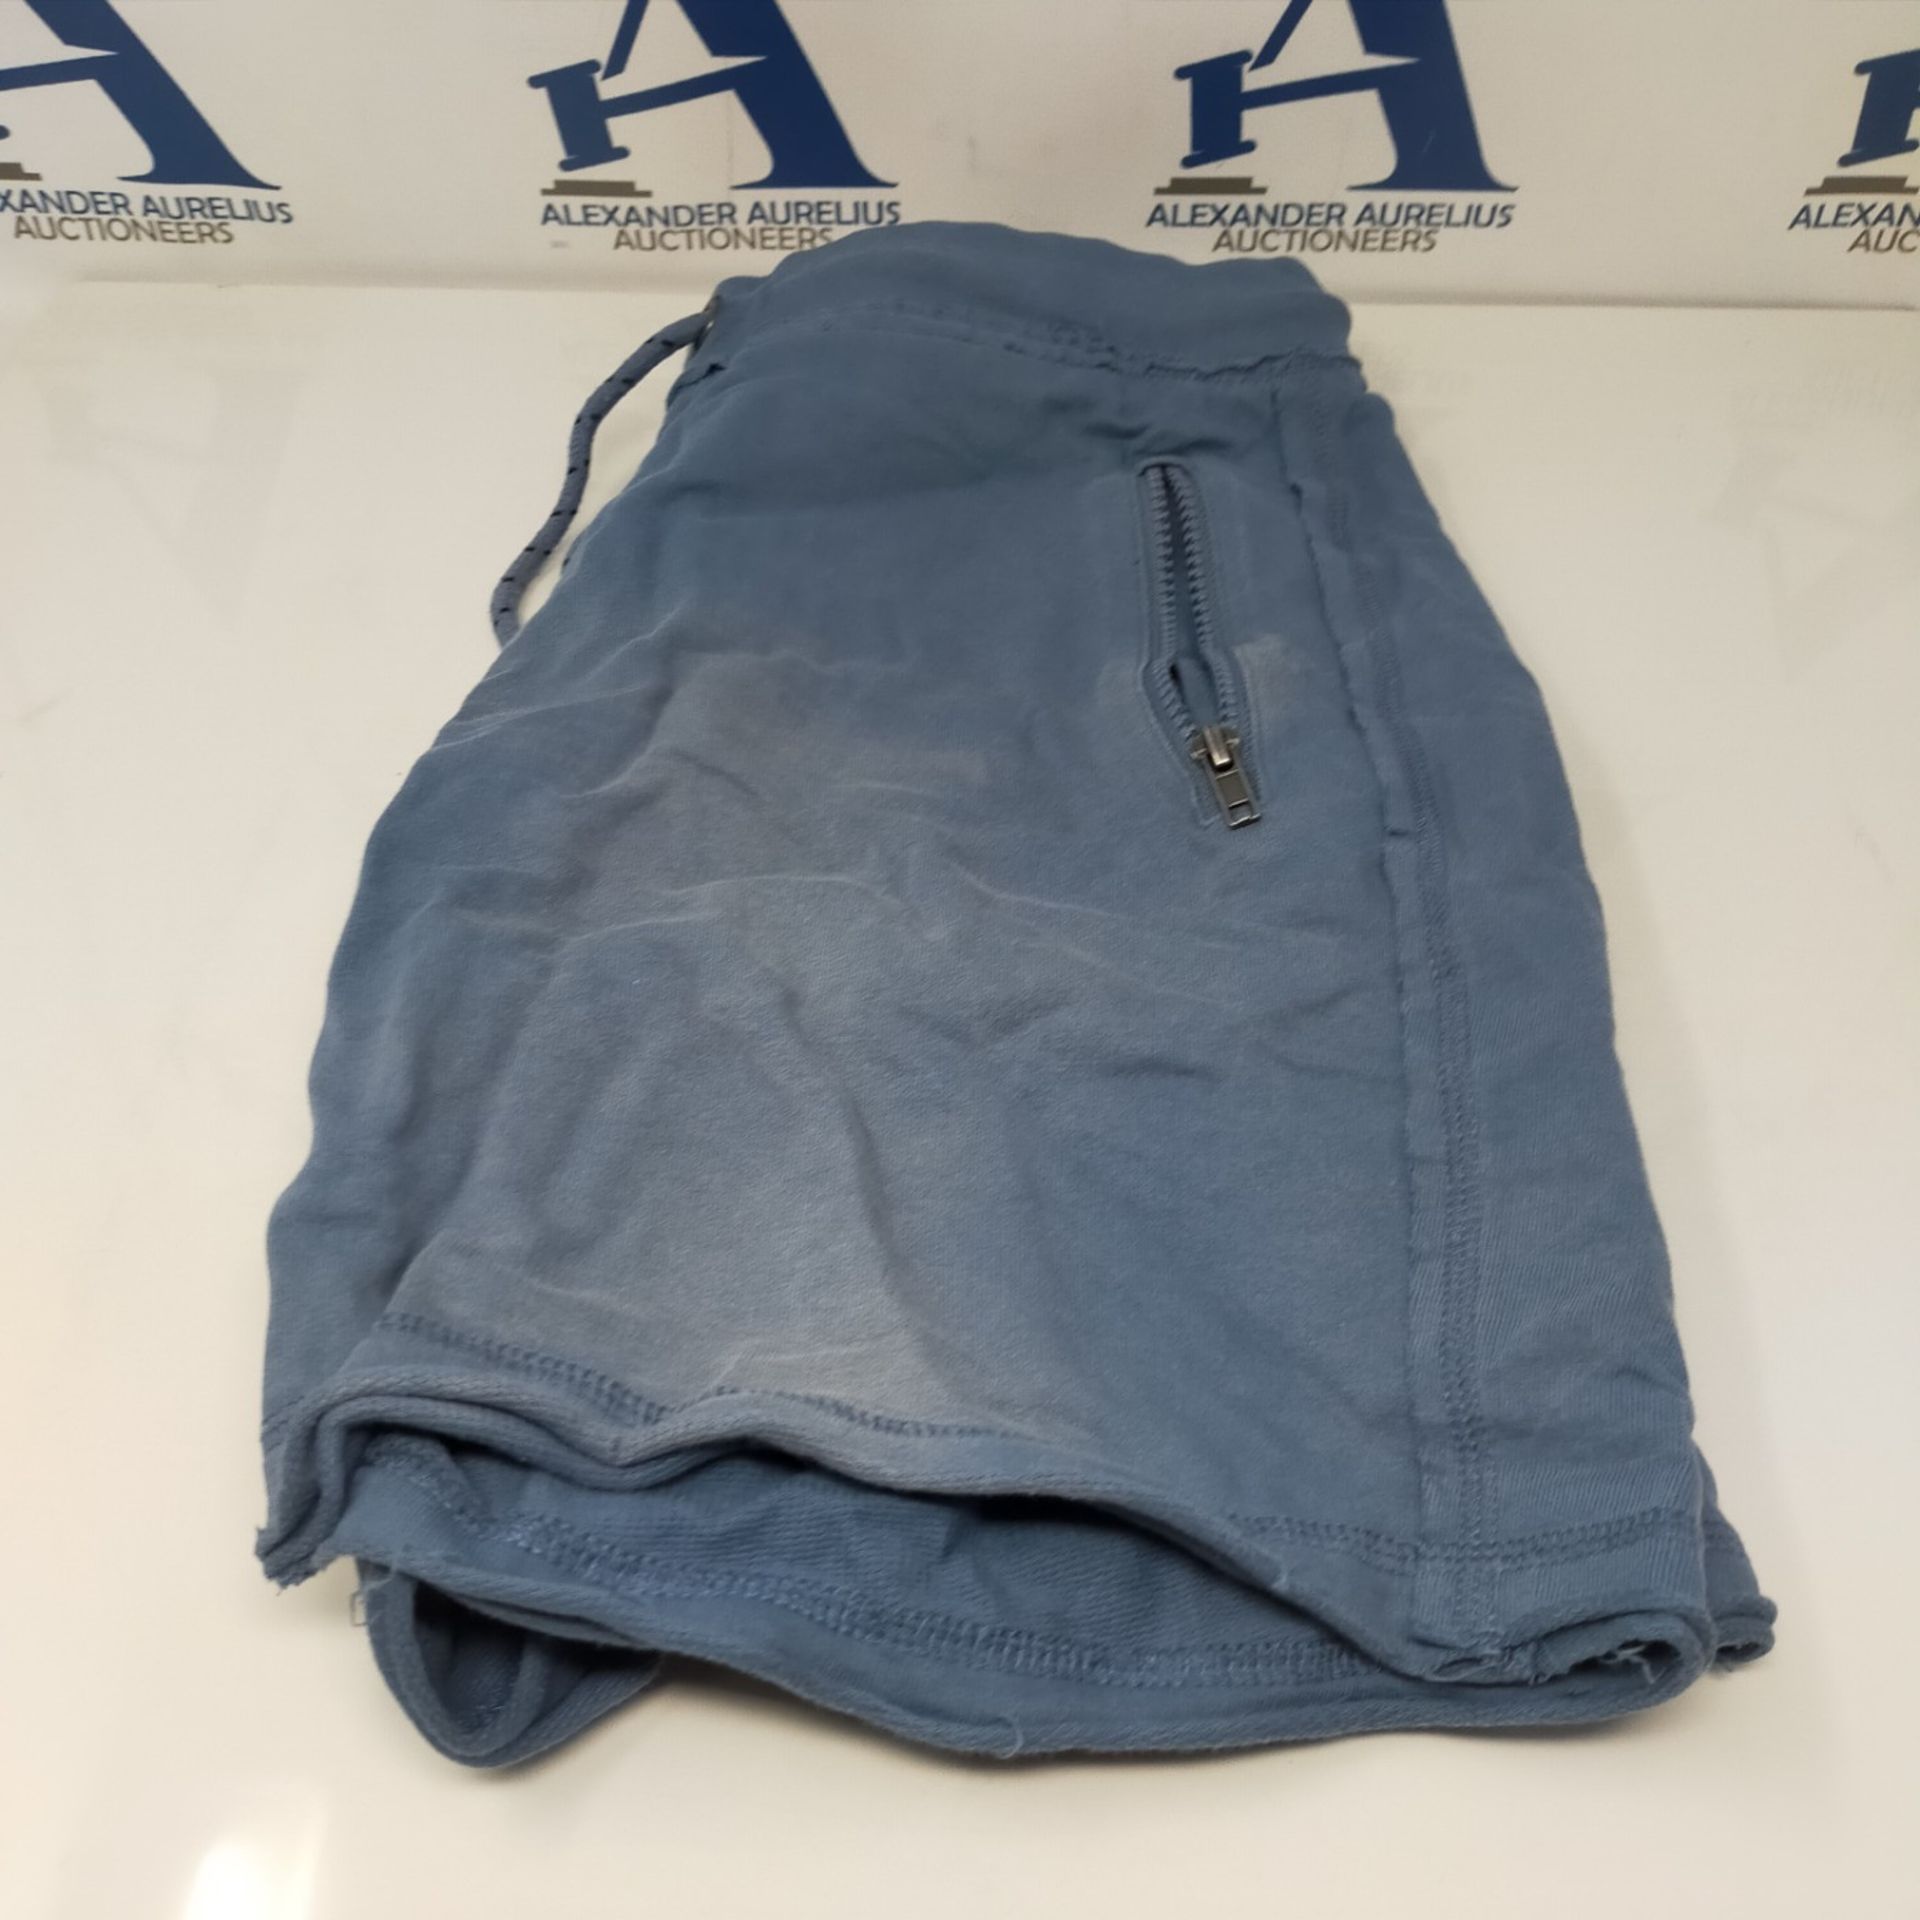 KEYLARGO Men's BENNO Casual Shorts, Flintstone Blue (1233), M